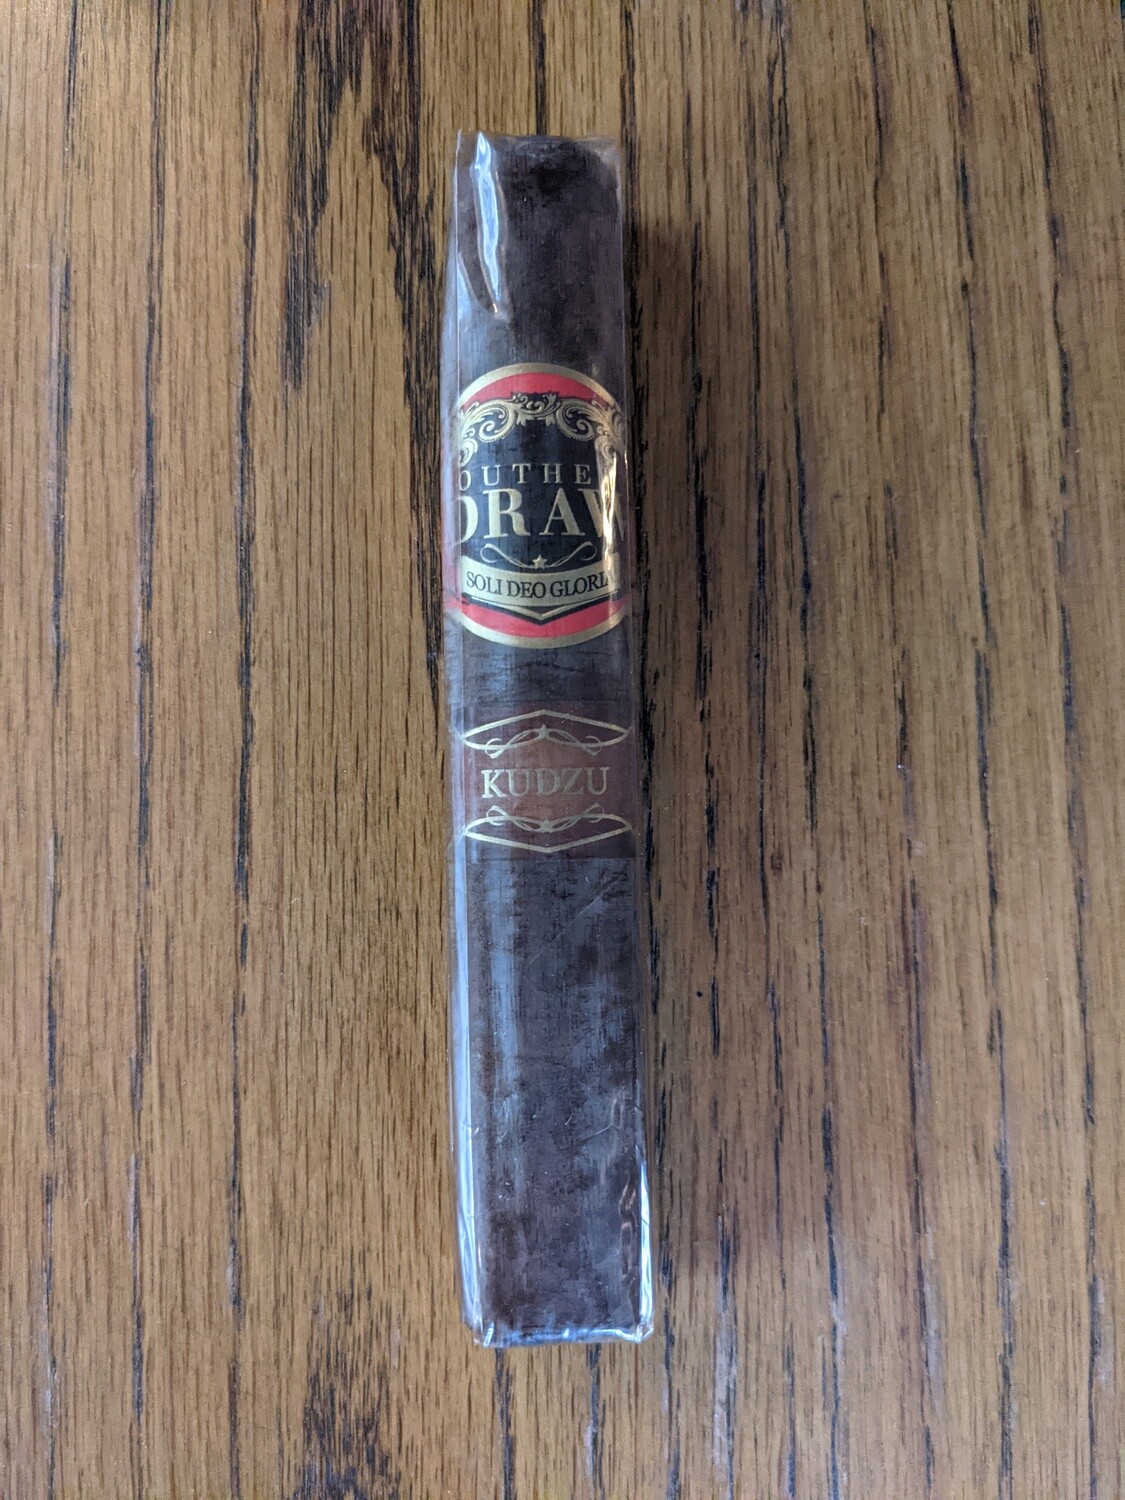 Southern Draw Kudzu Oscuro Robusto 5.5 x 54 Single Cigar